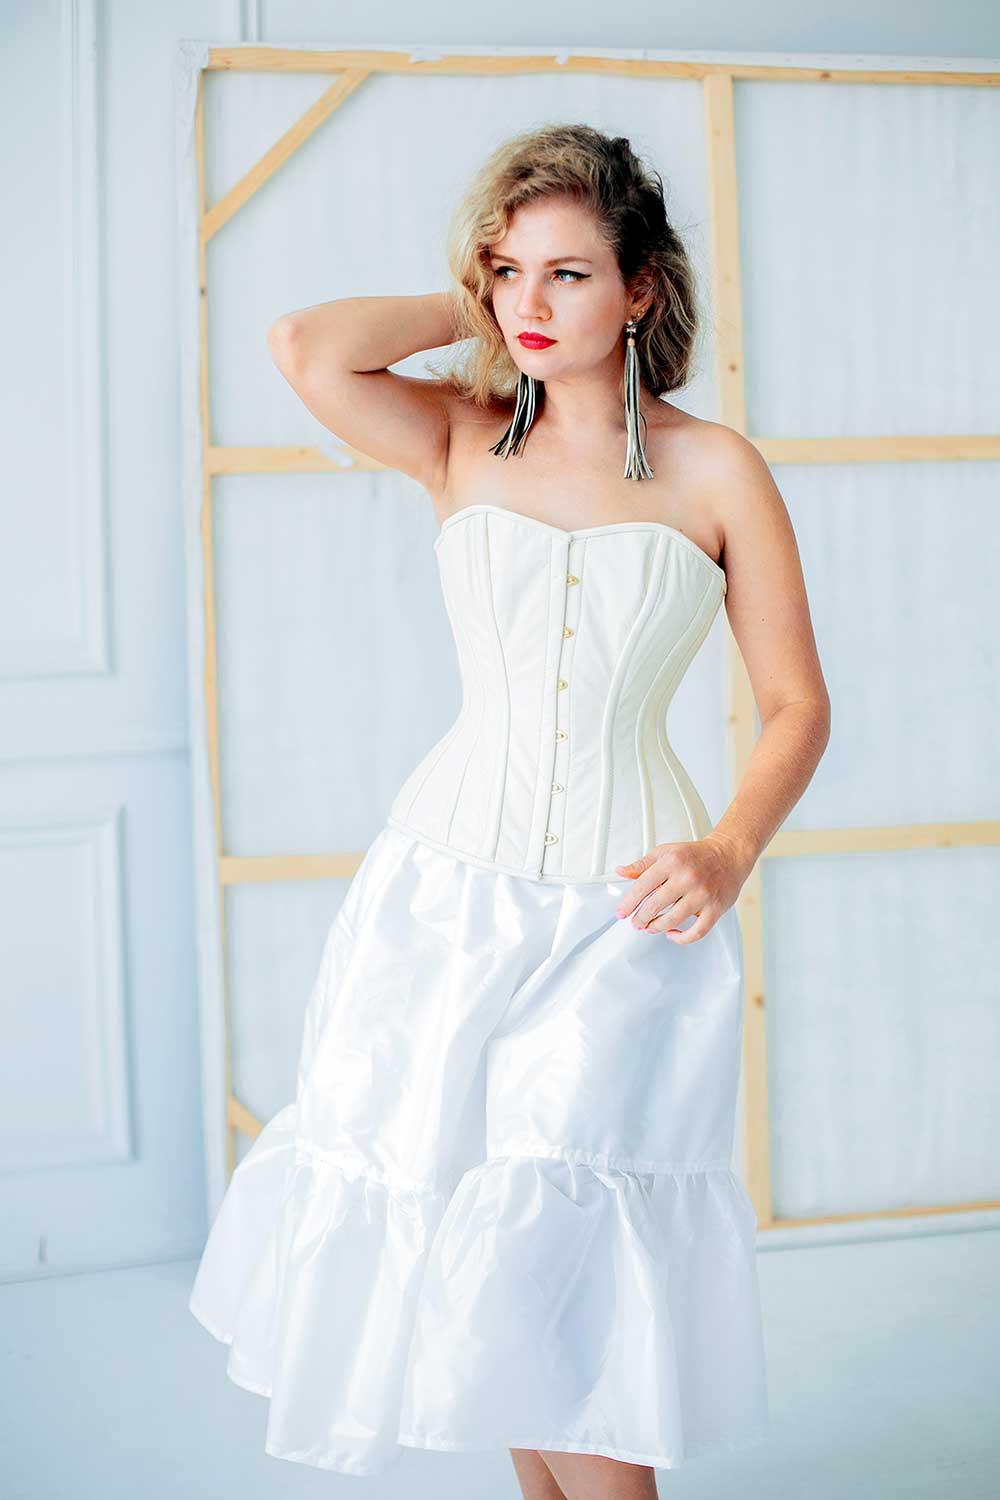 Le Spectre de la rose ballet exclusive gown skirt created by images of –  Corsettery Authentic Corsets USA